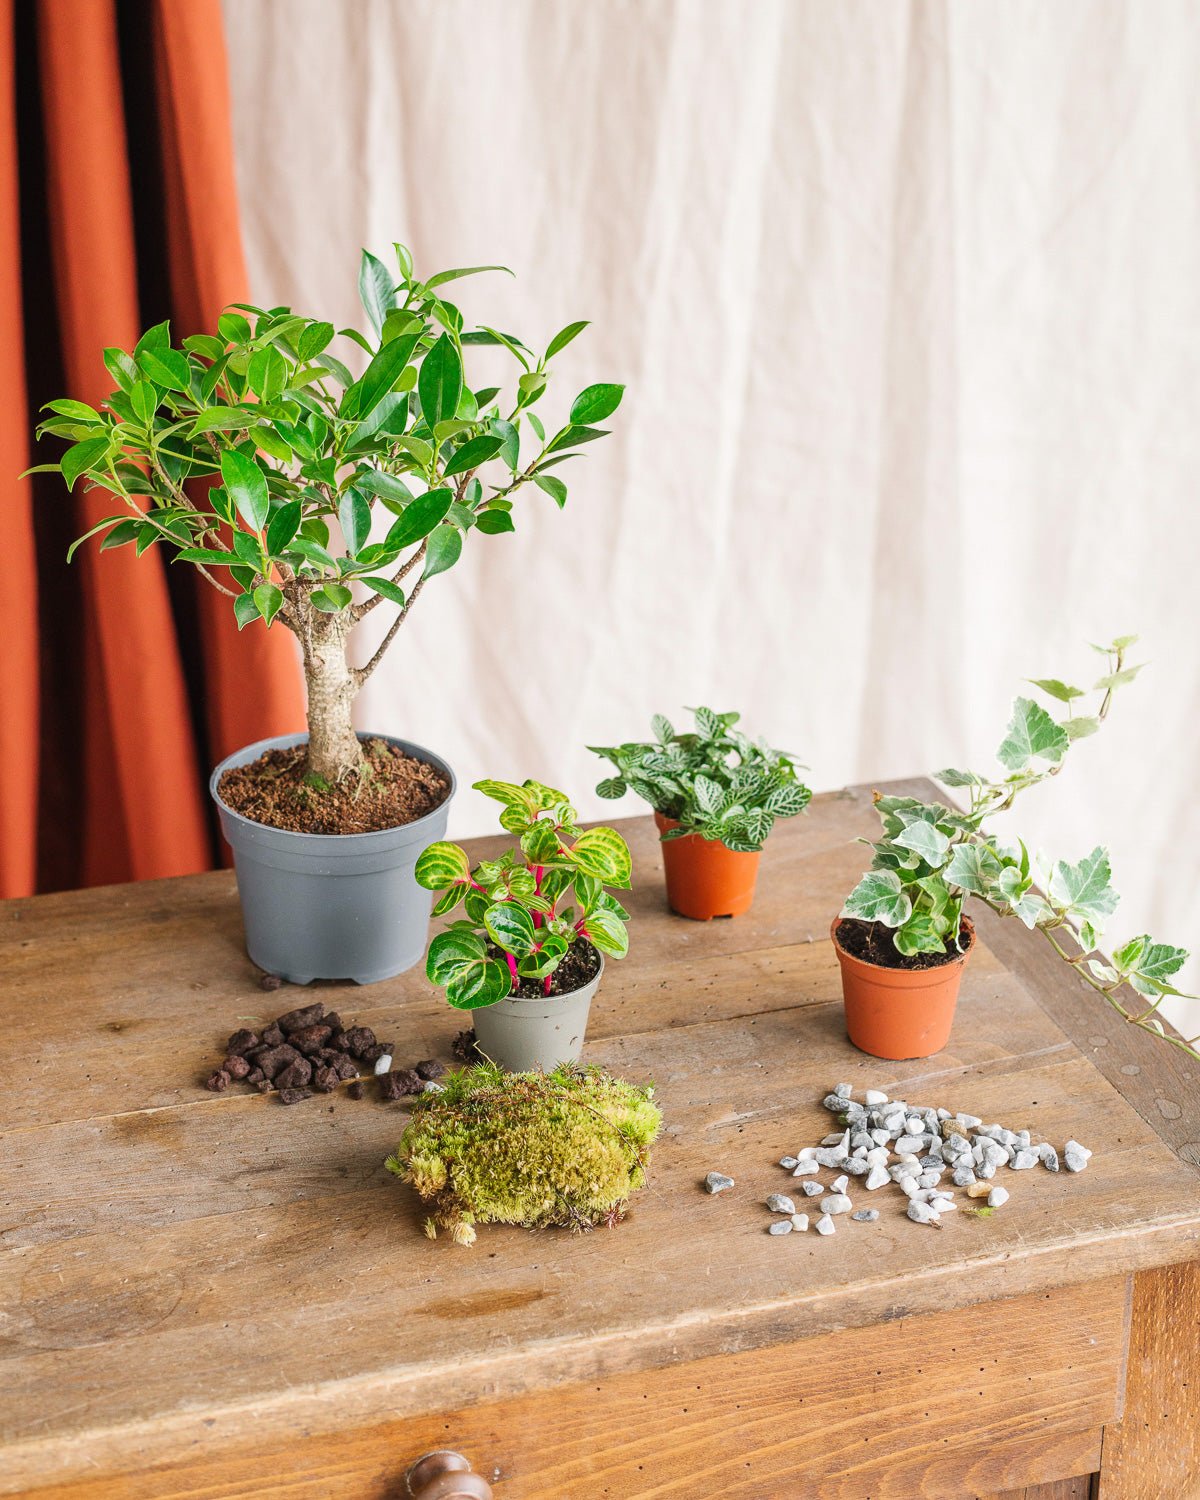 Kit terrarium DIY Bonsai - 4 Plantes